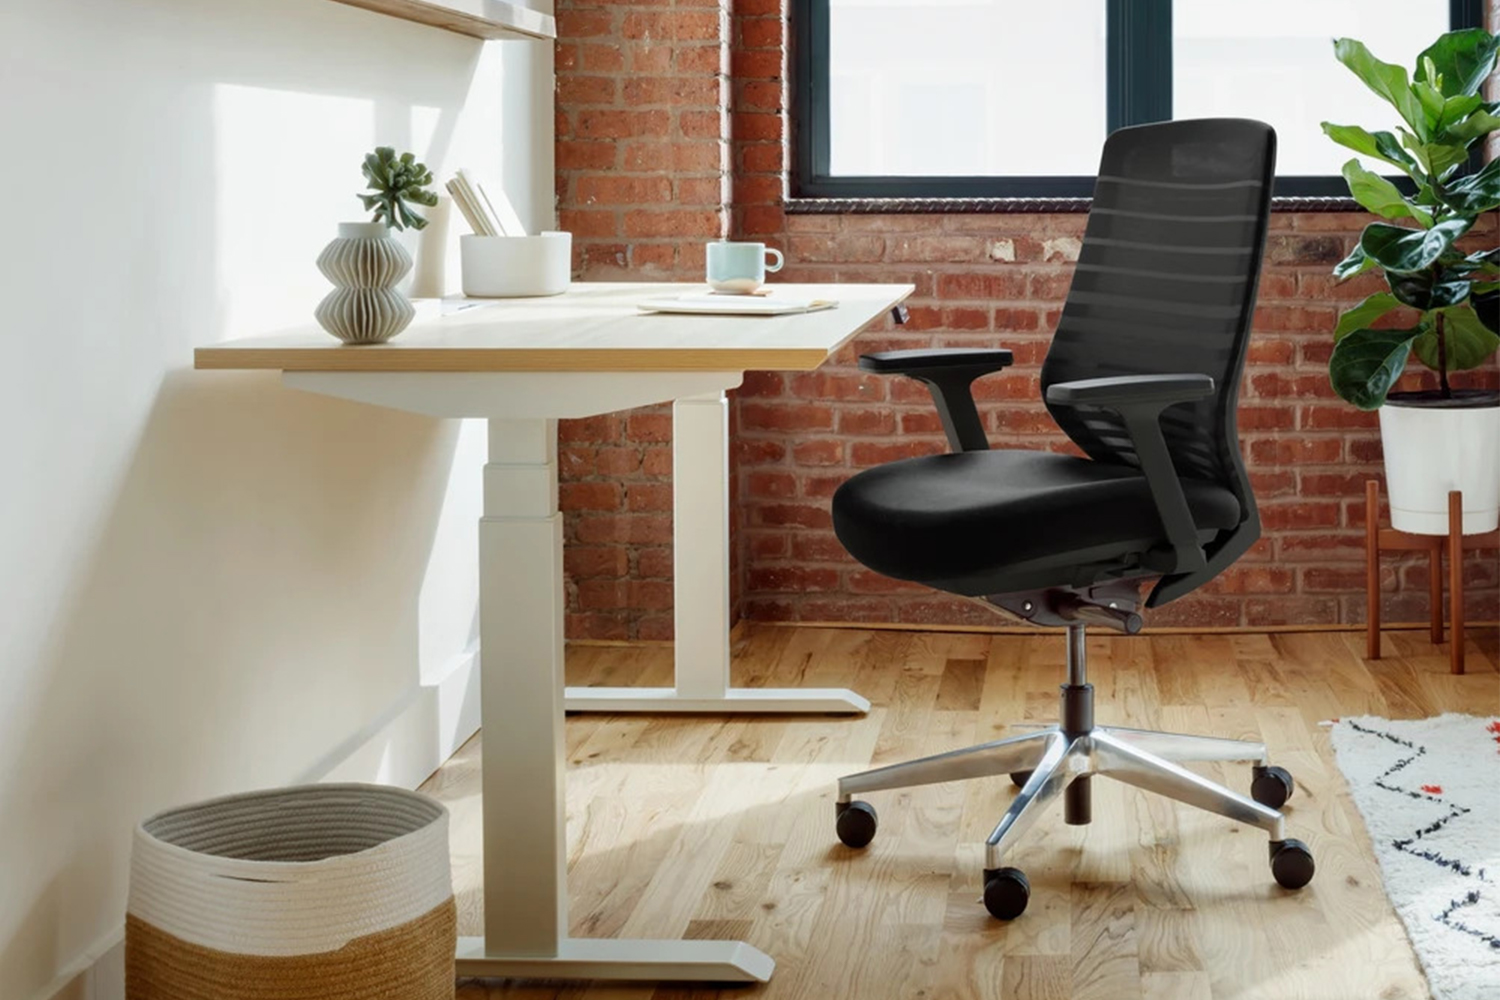 https://www.insidehook.com/wp-content/uploads/2021/04/branch-ergonomic-office-chair.jpg?fit=1500%2C1000